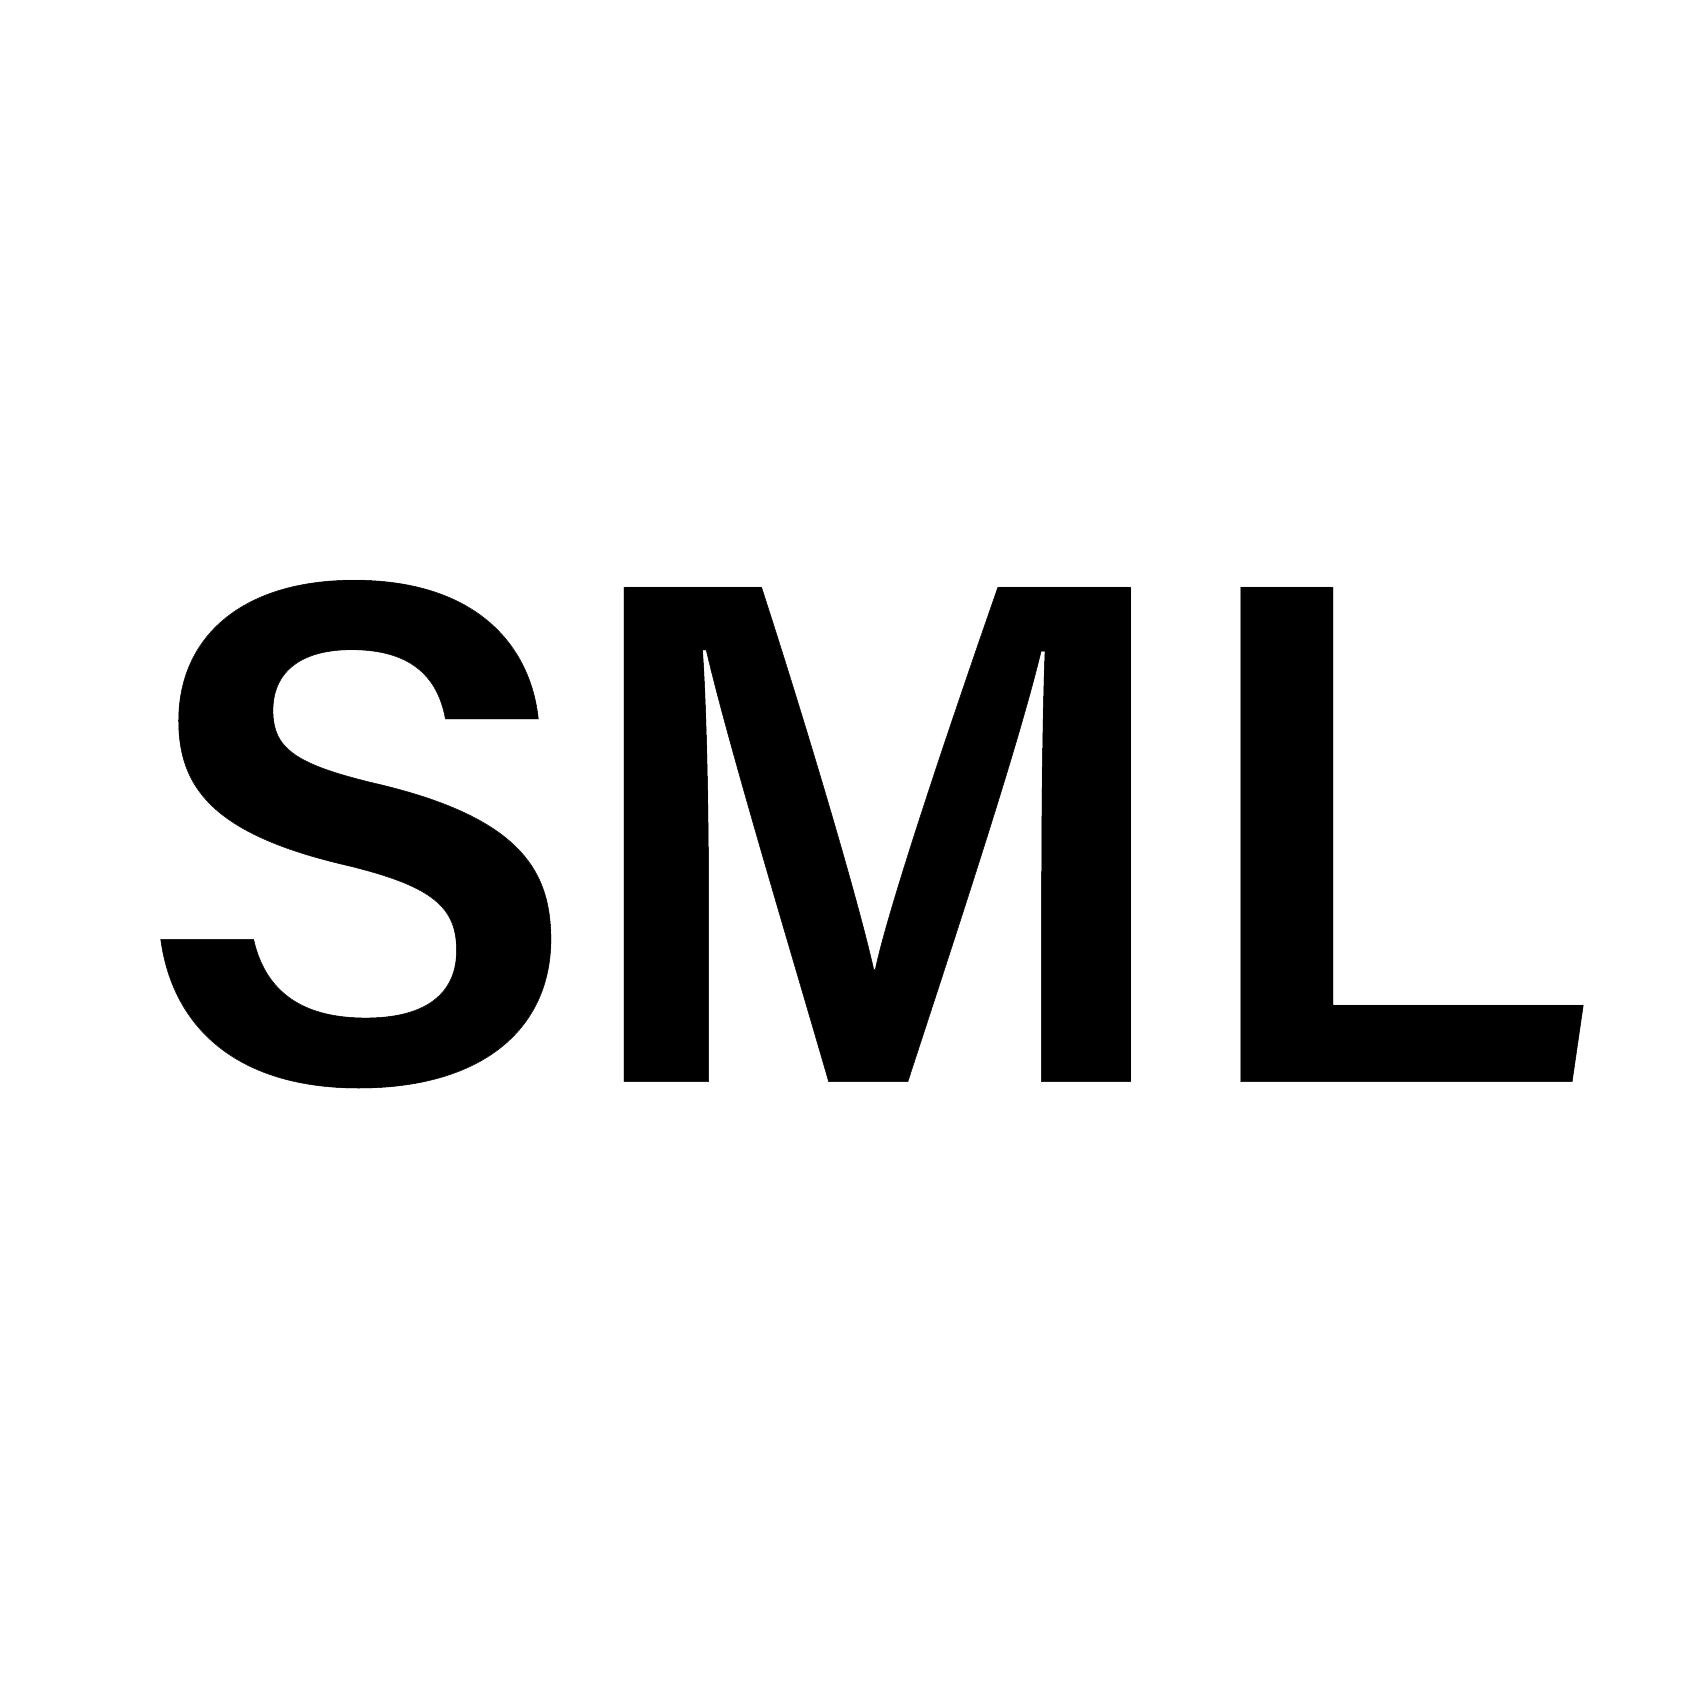 SML Lighting